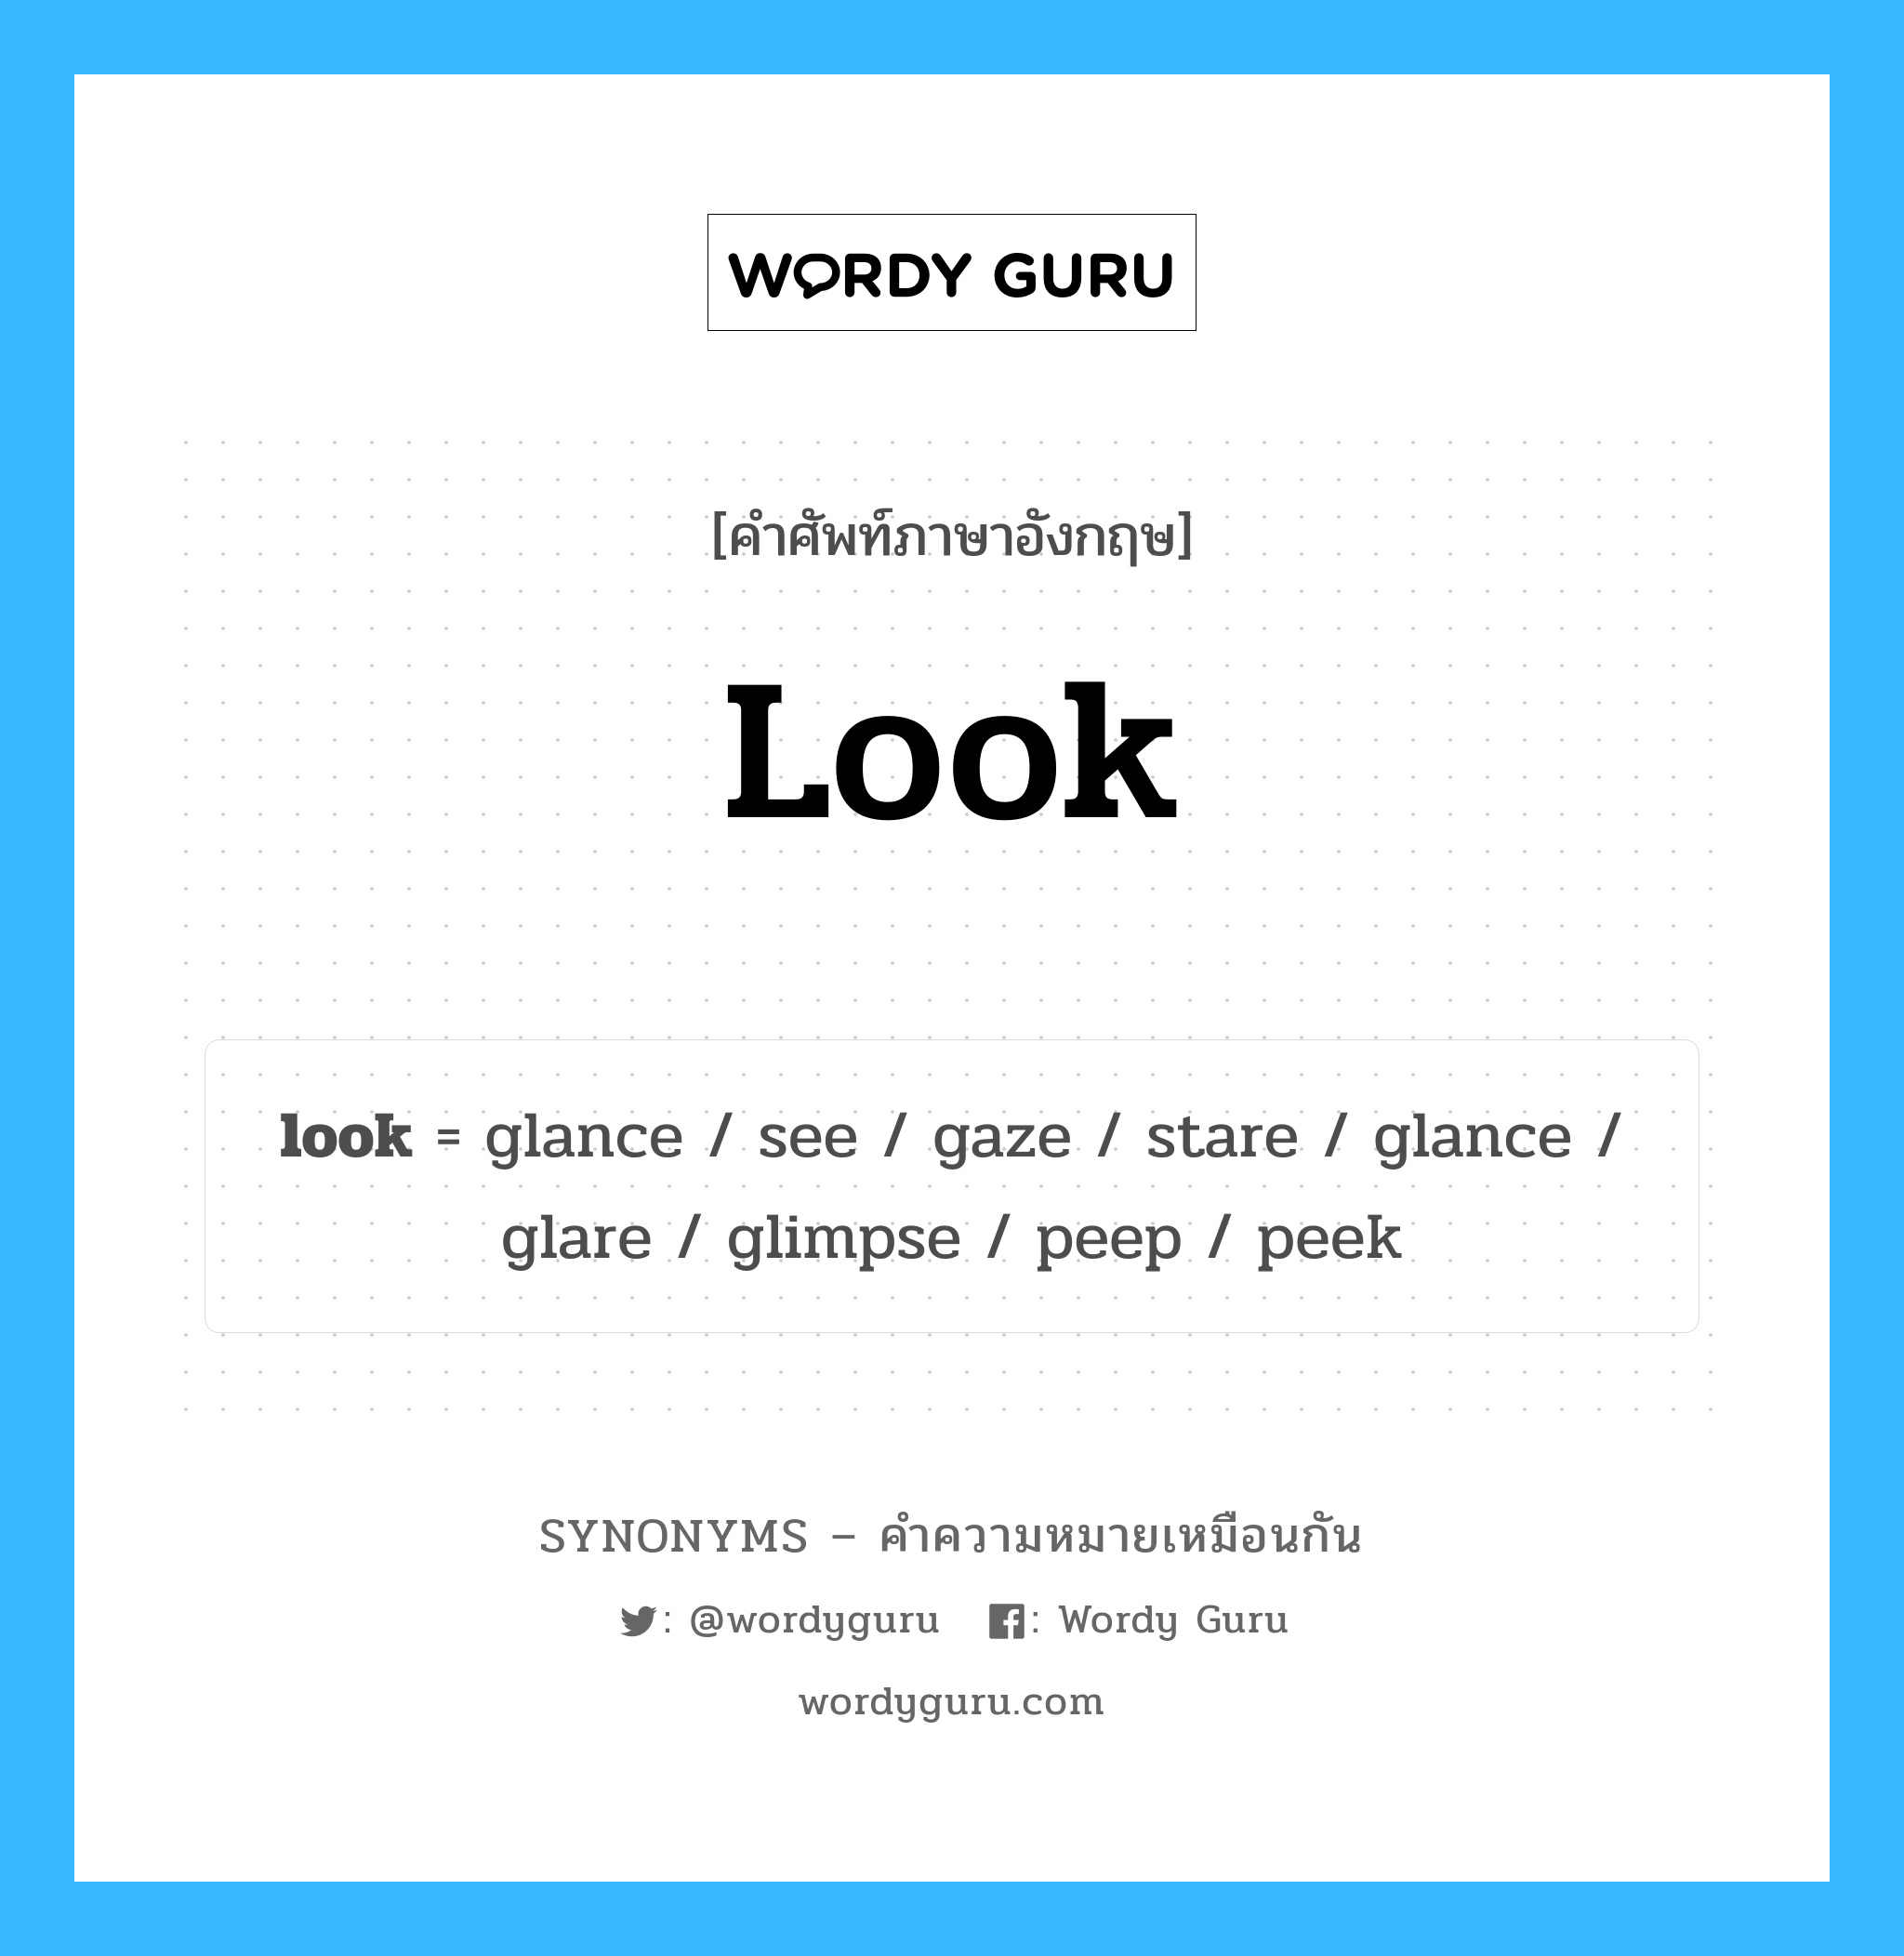 glare เป็นหนึ่งใน look และมีคำอื่น ๆ อีกดังนี้, คำศัพท์ภาษาอังกฤษ glare ความหมายคล้ายกันกับ look แปลว่า แสงจ้า หมวด look